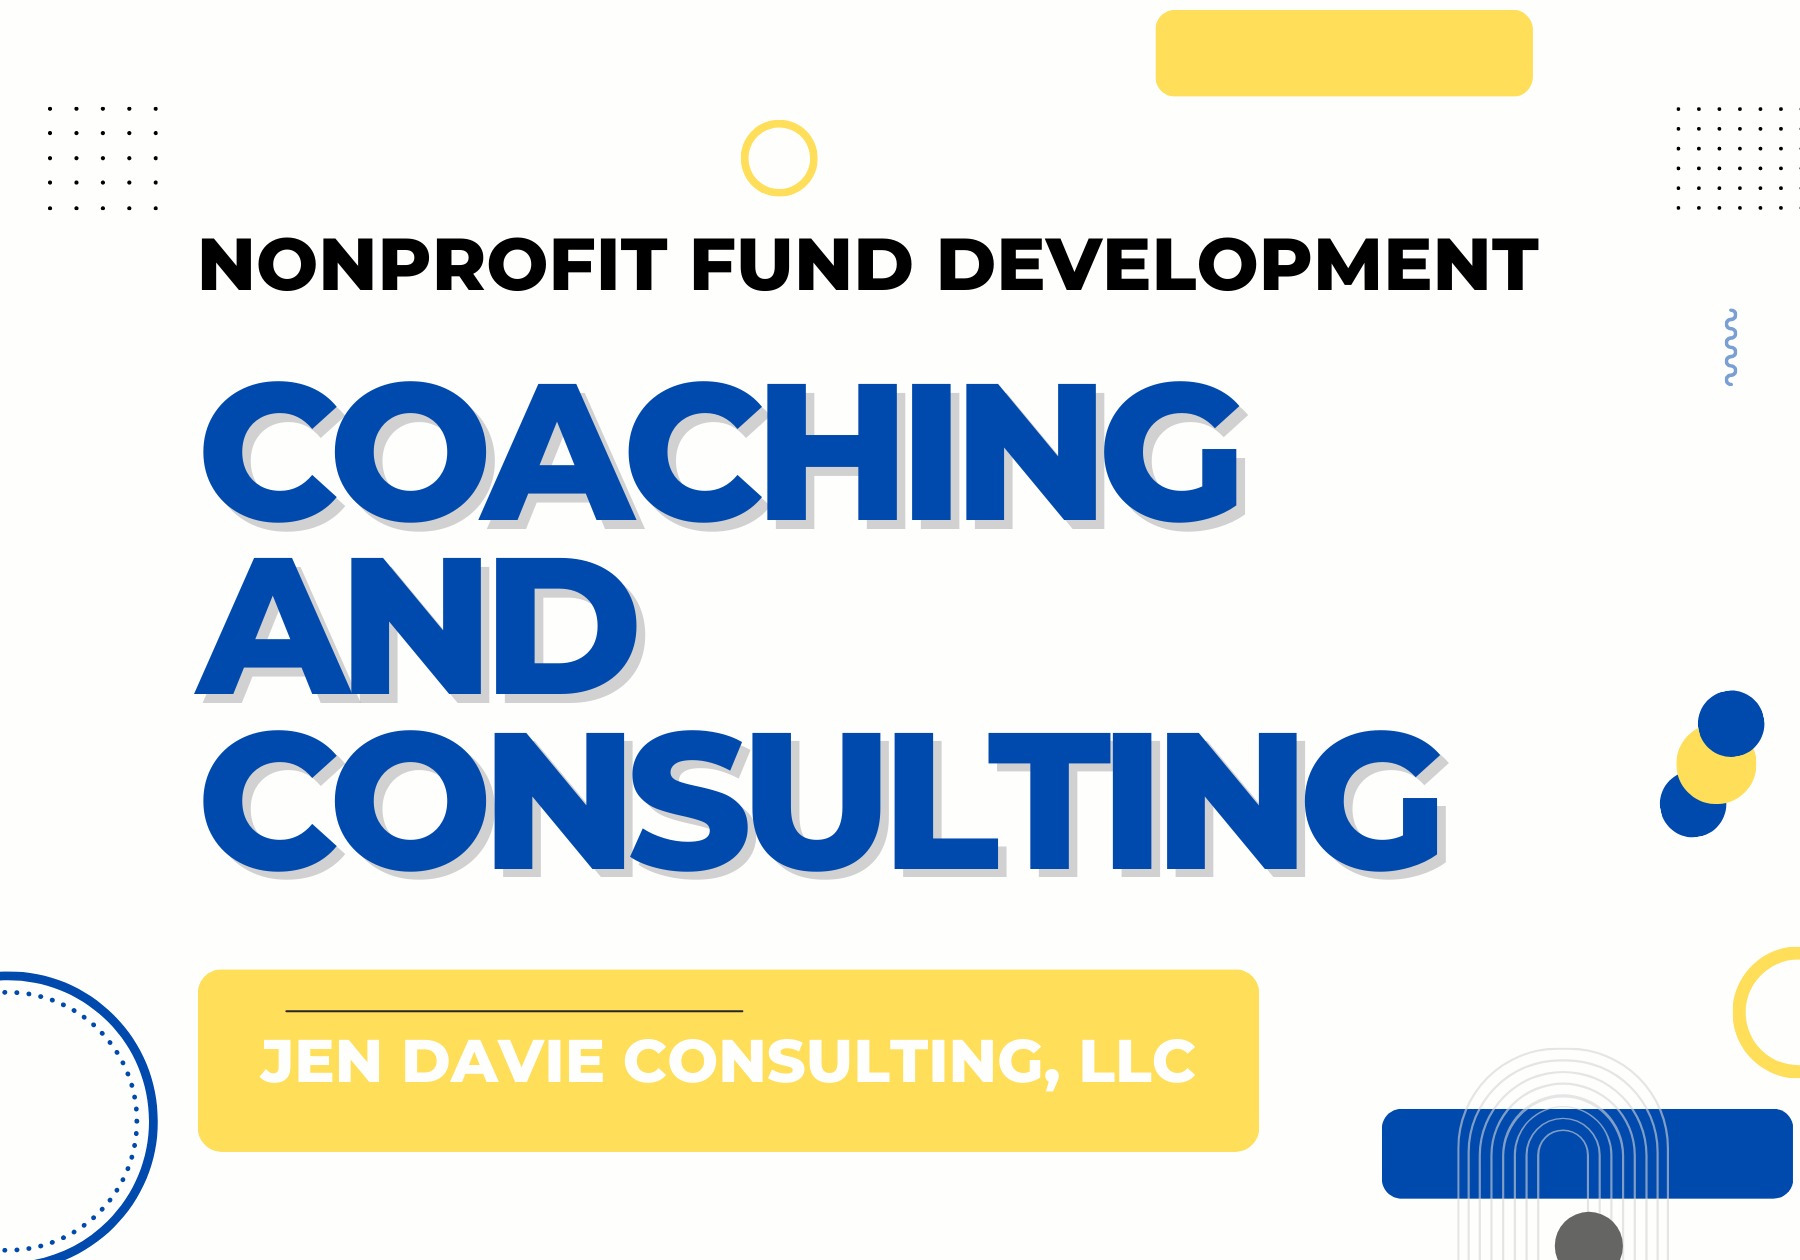 Jen Davie Consulting, LLC